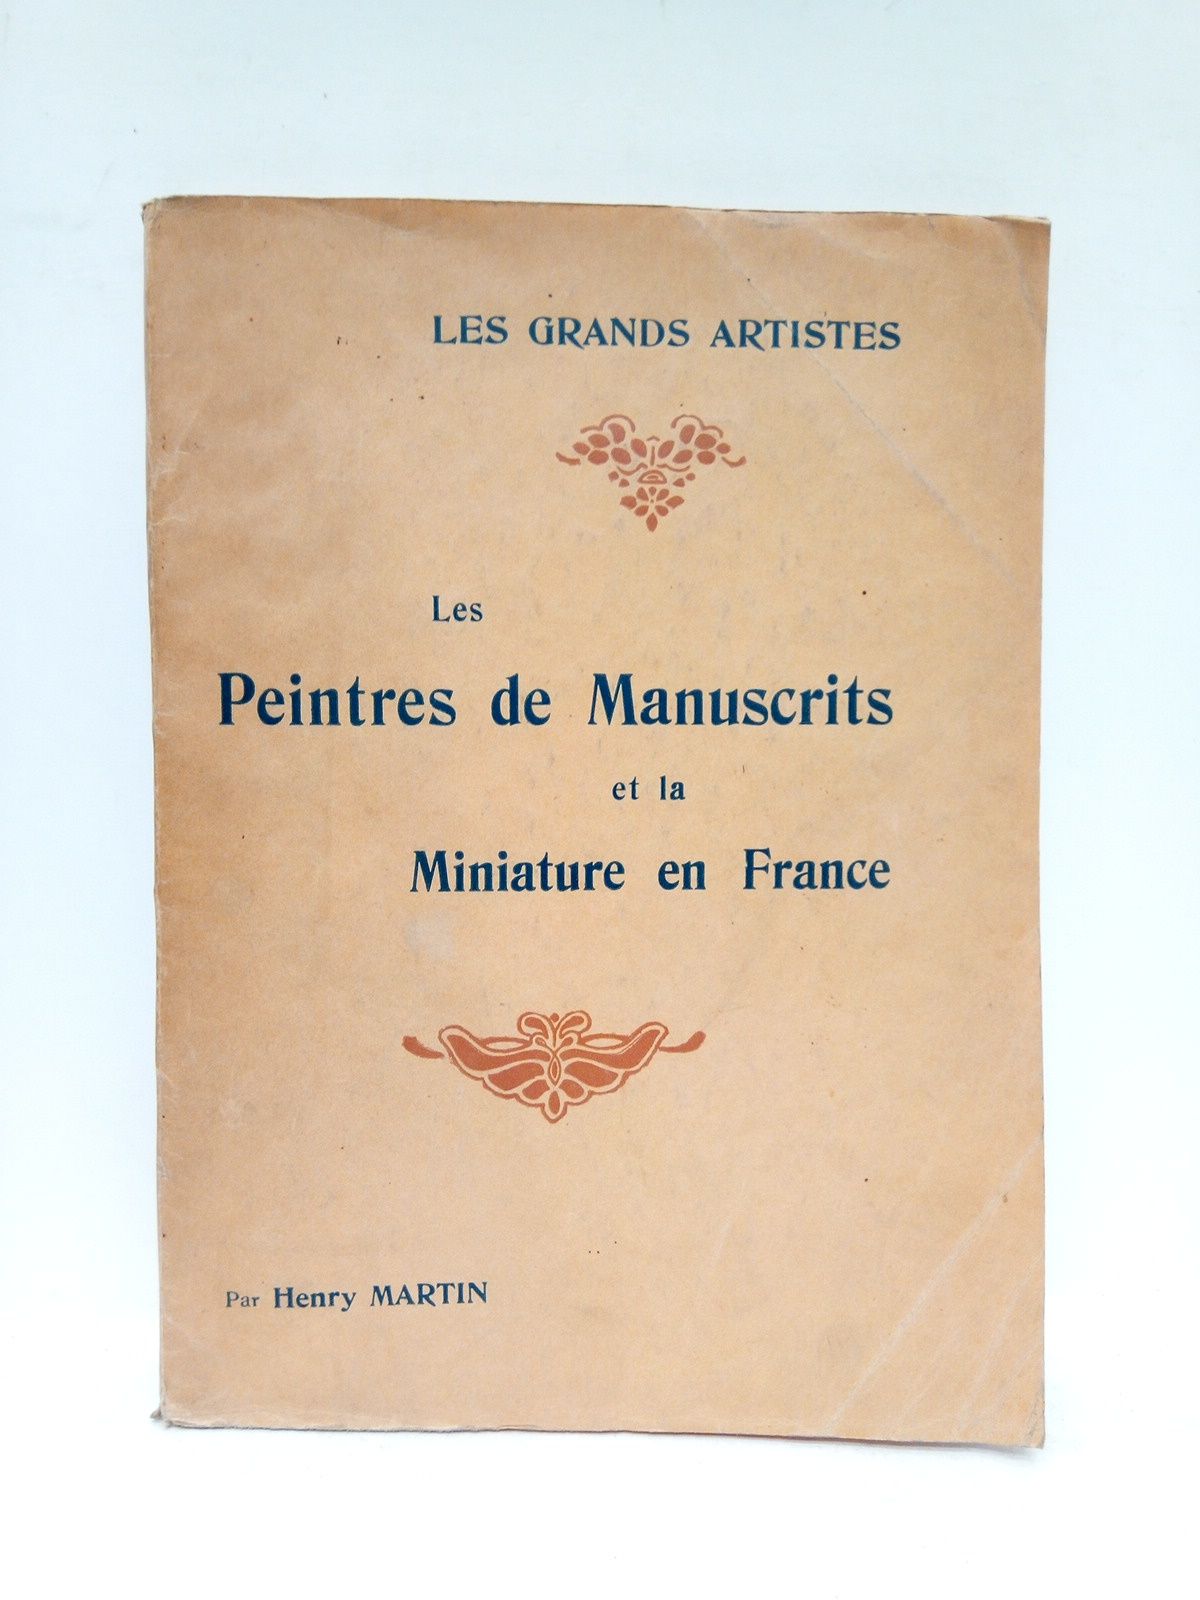 MARTIN, Henry - Les Peintres de Manuscrits et la Miniature en France / Etude critique illustre de vingt-quatre planches hors texte